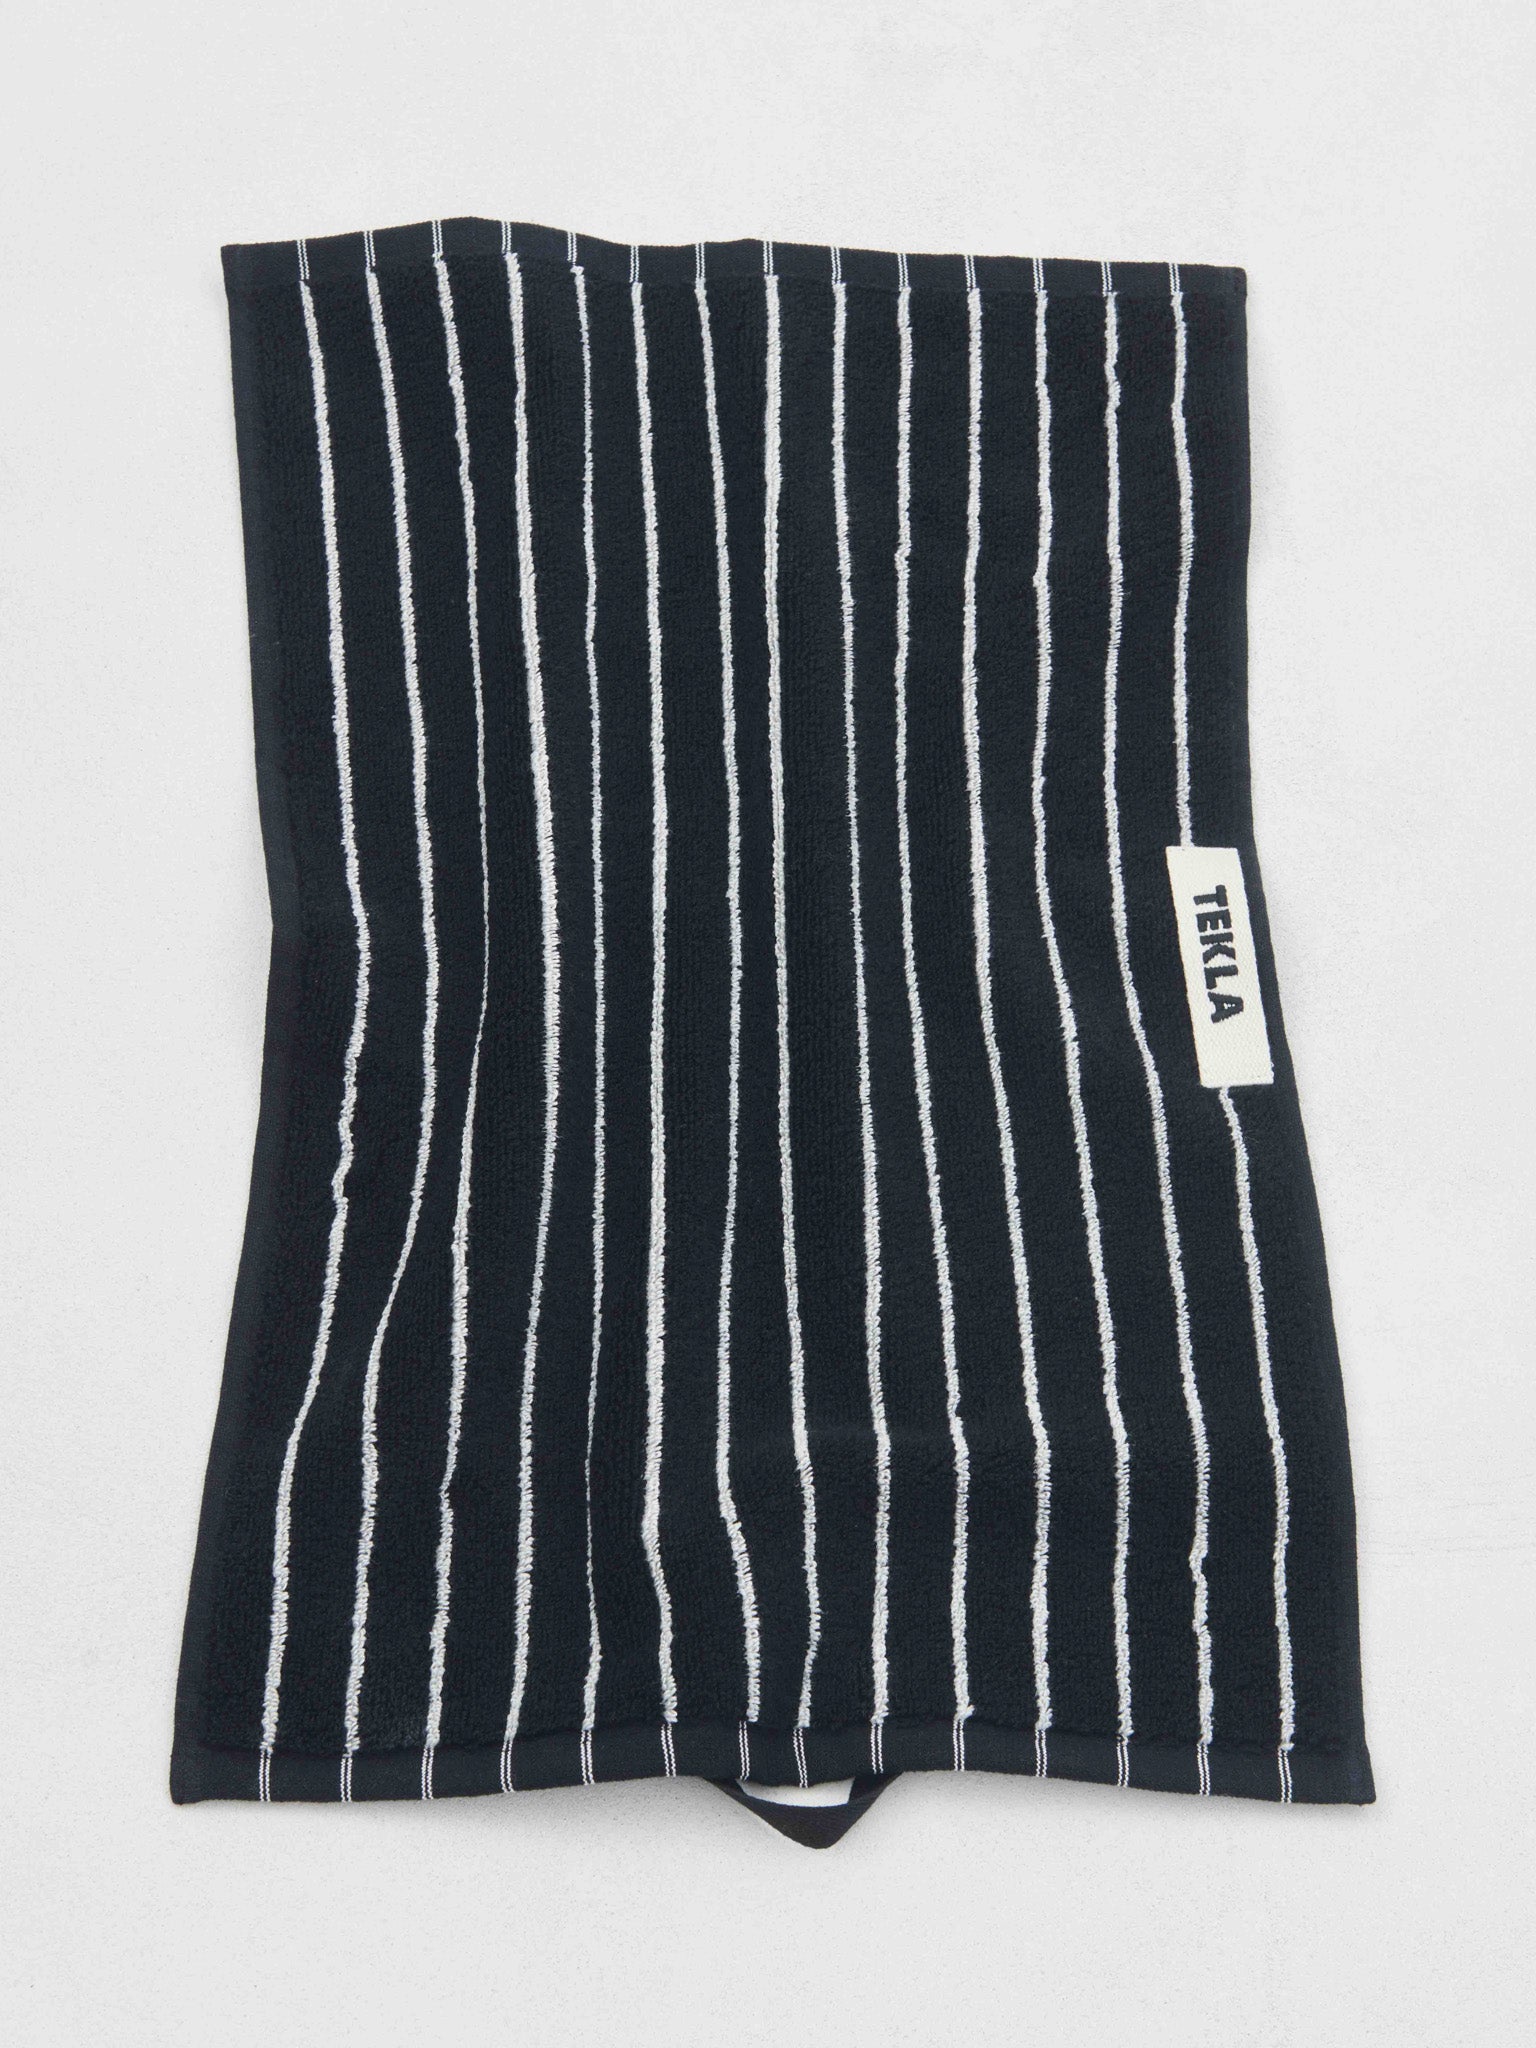 Gæstehåndklæde i Black Stripes